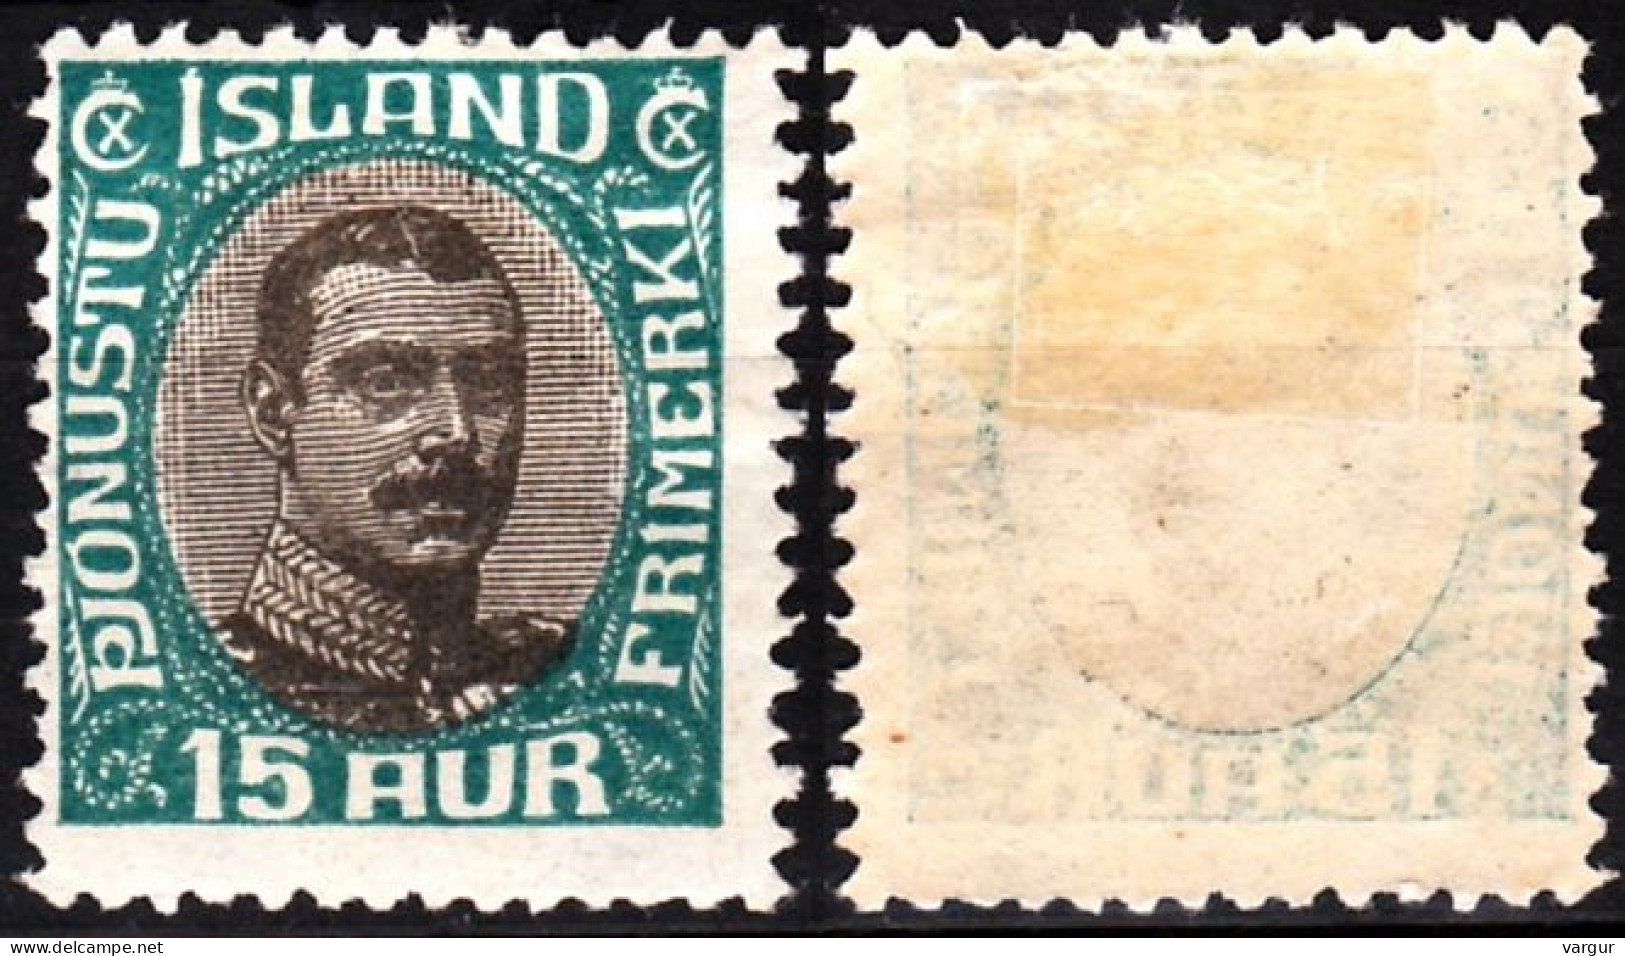 ICELAND / ISLAND Postage Due 1920 King Christian X, 15Aur, MH - Servizio